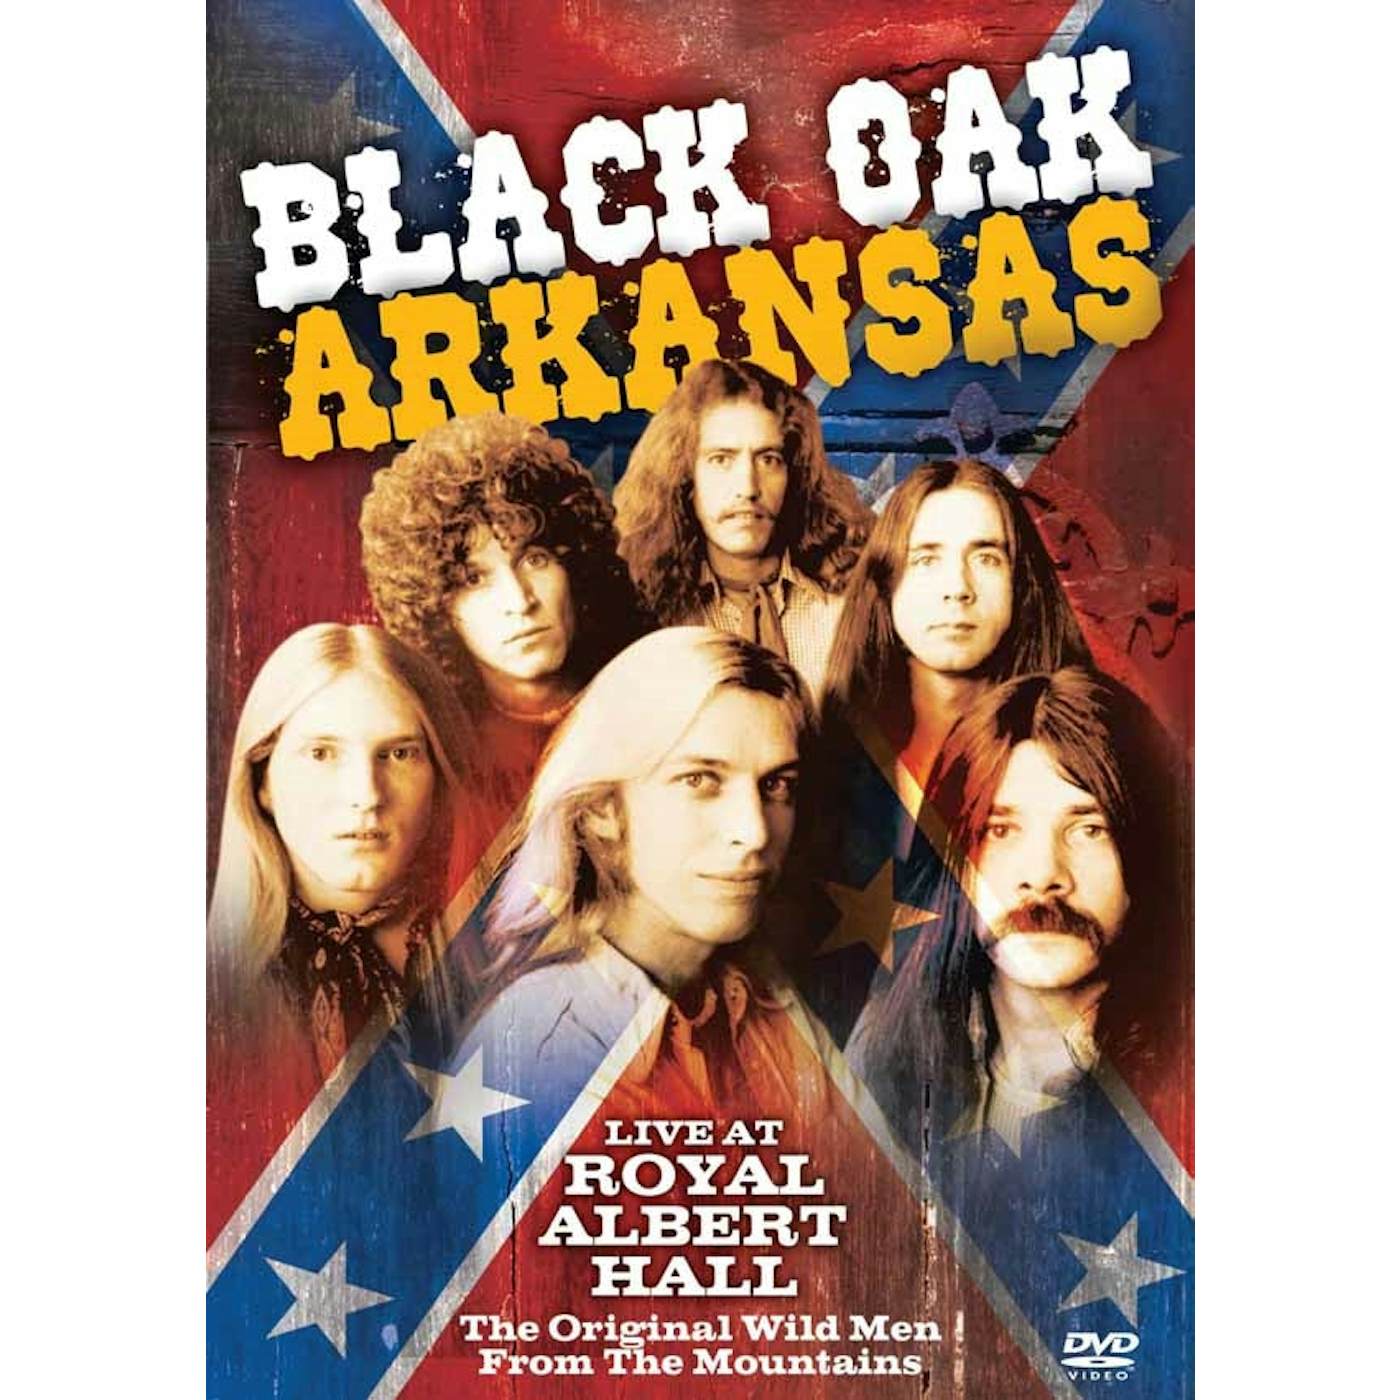 Black Oak Arkansas DVD - Live At Royal Albert Hall